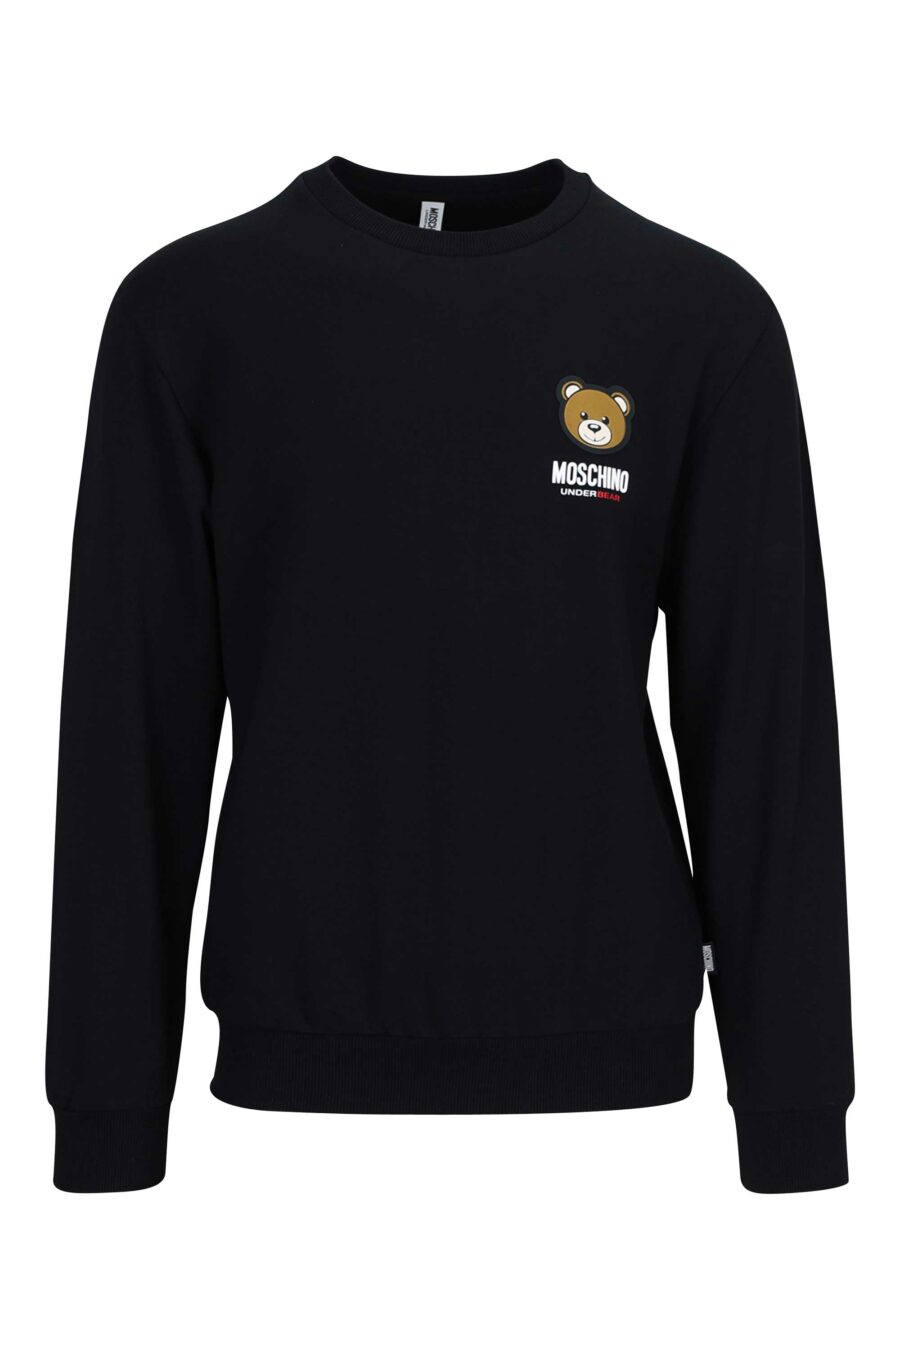 Black sweatshirt with "underbear" bear logo patch - 667113012964